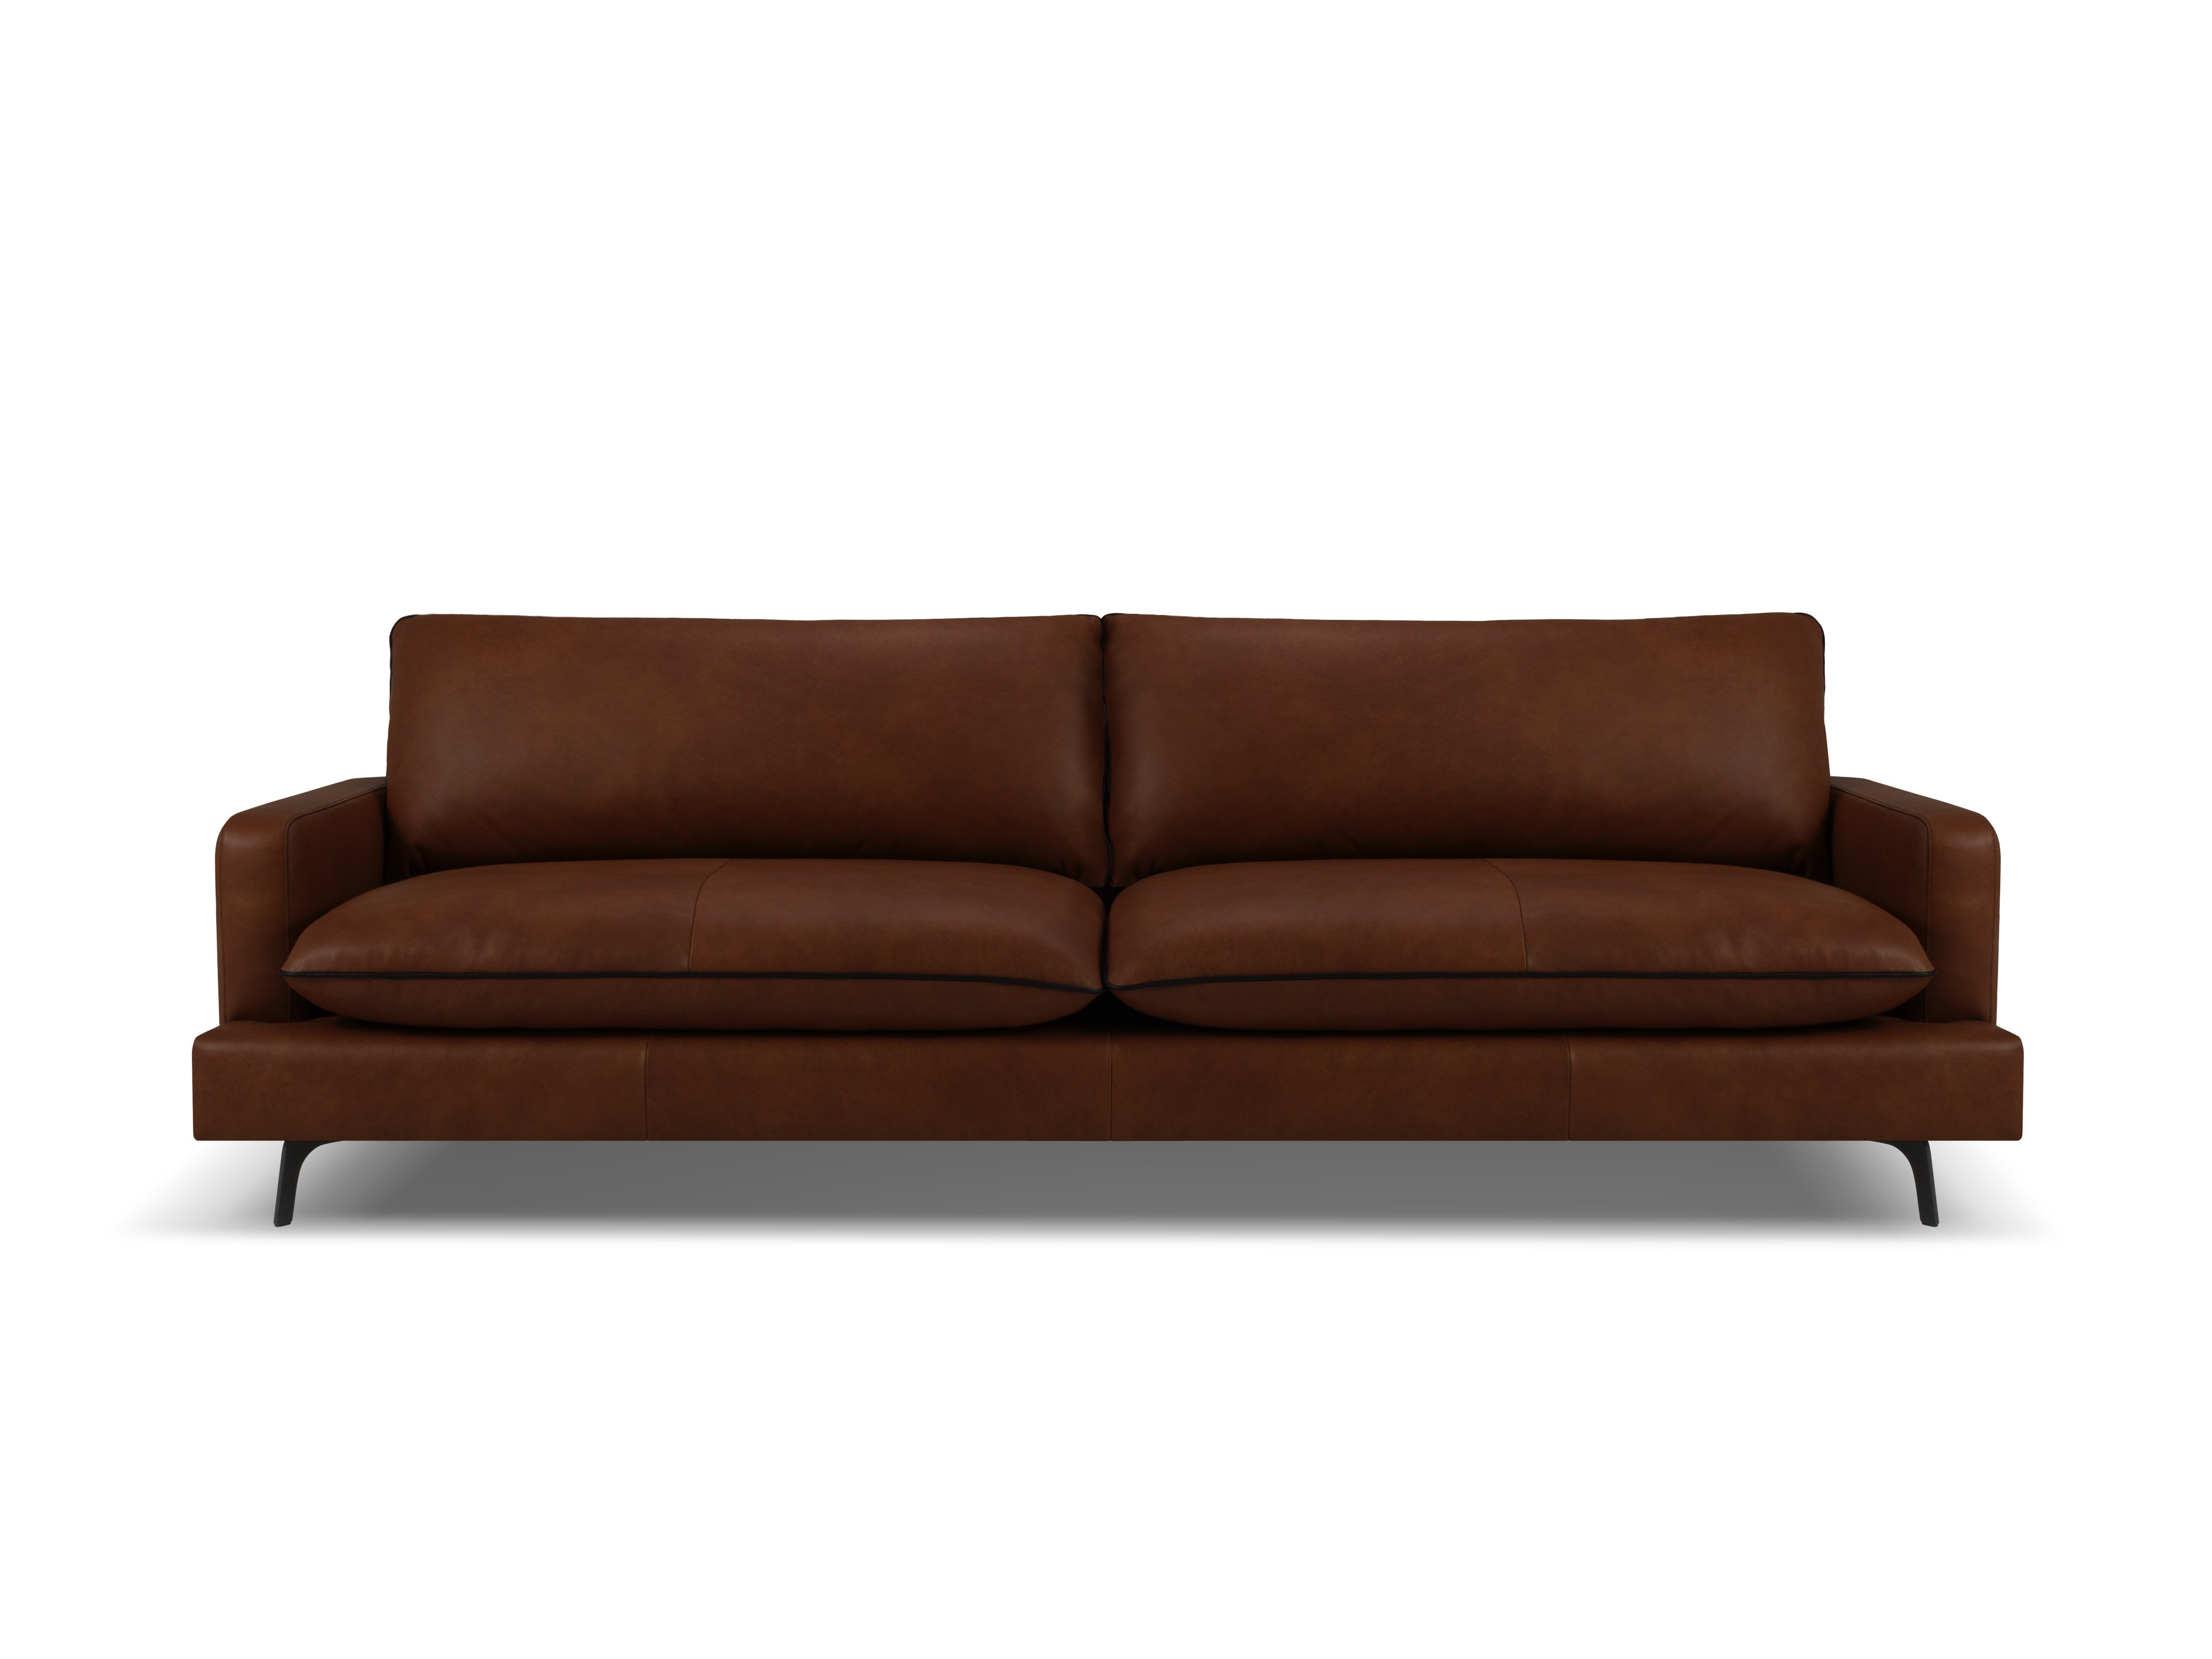 Genuine Leather Sofa, "Virna", 4 Seats, 260x95x85
Made in Europe, Micadoni, Eye on Design